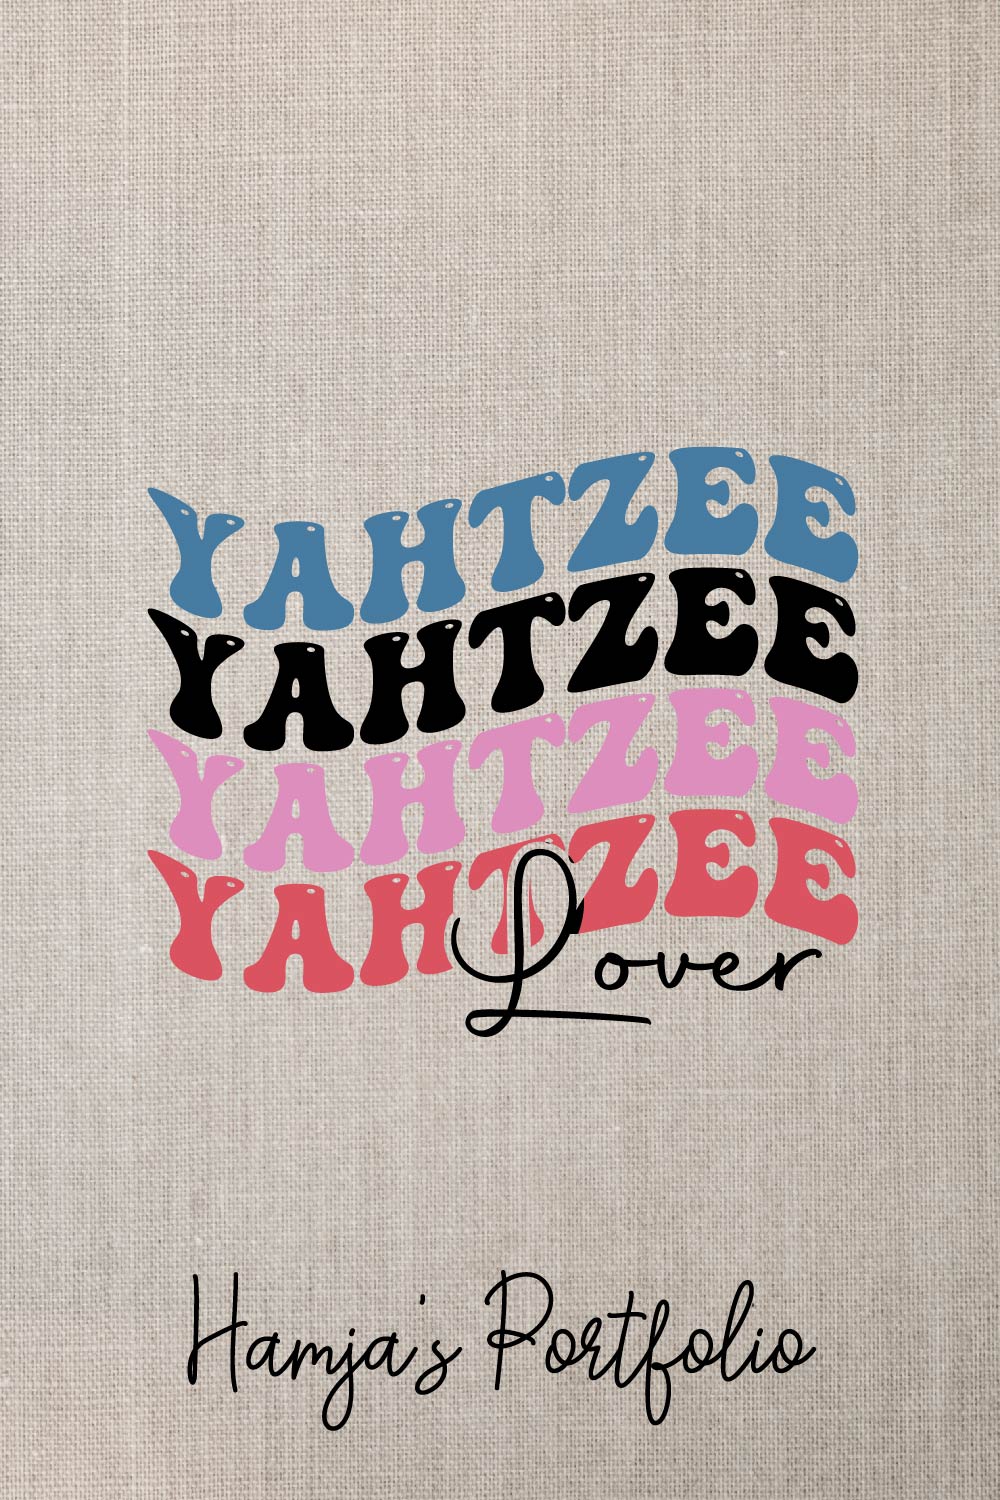 Yahtzee Lover Vector Svg pinterest preview image.